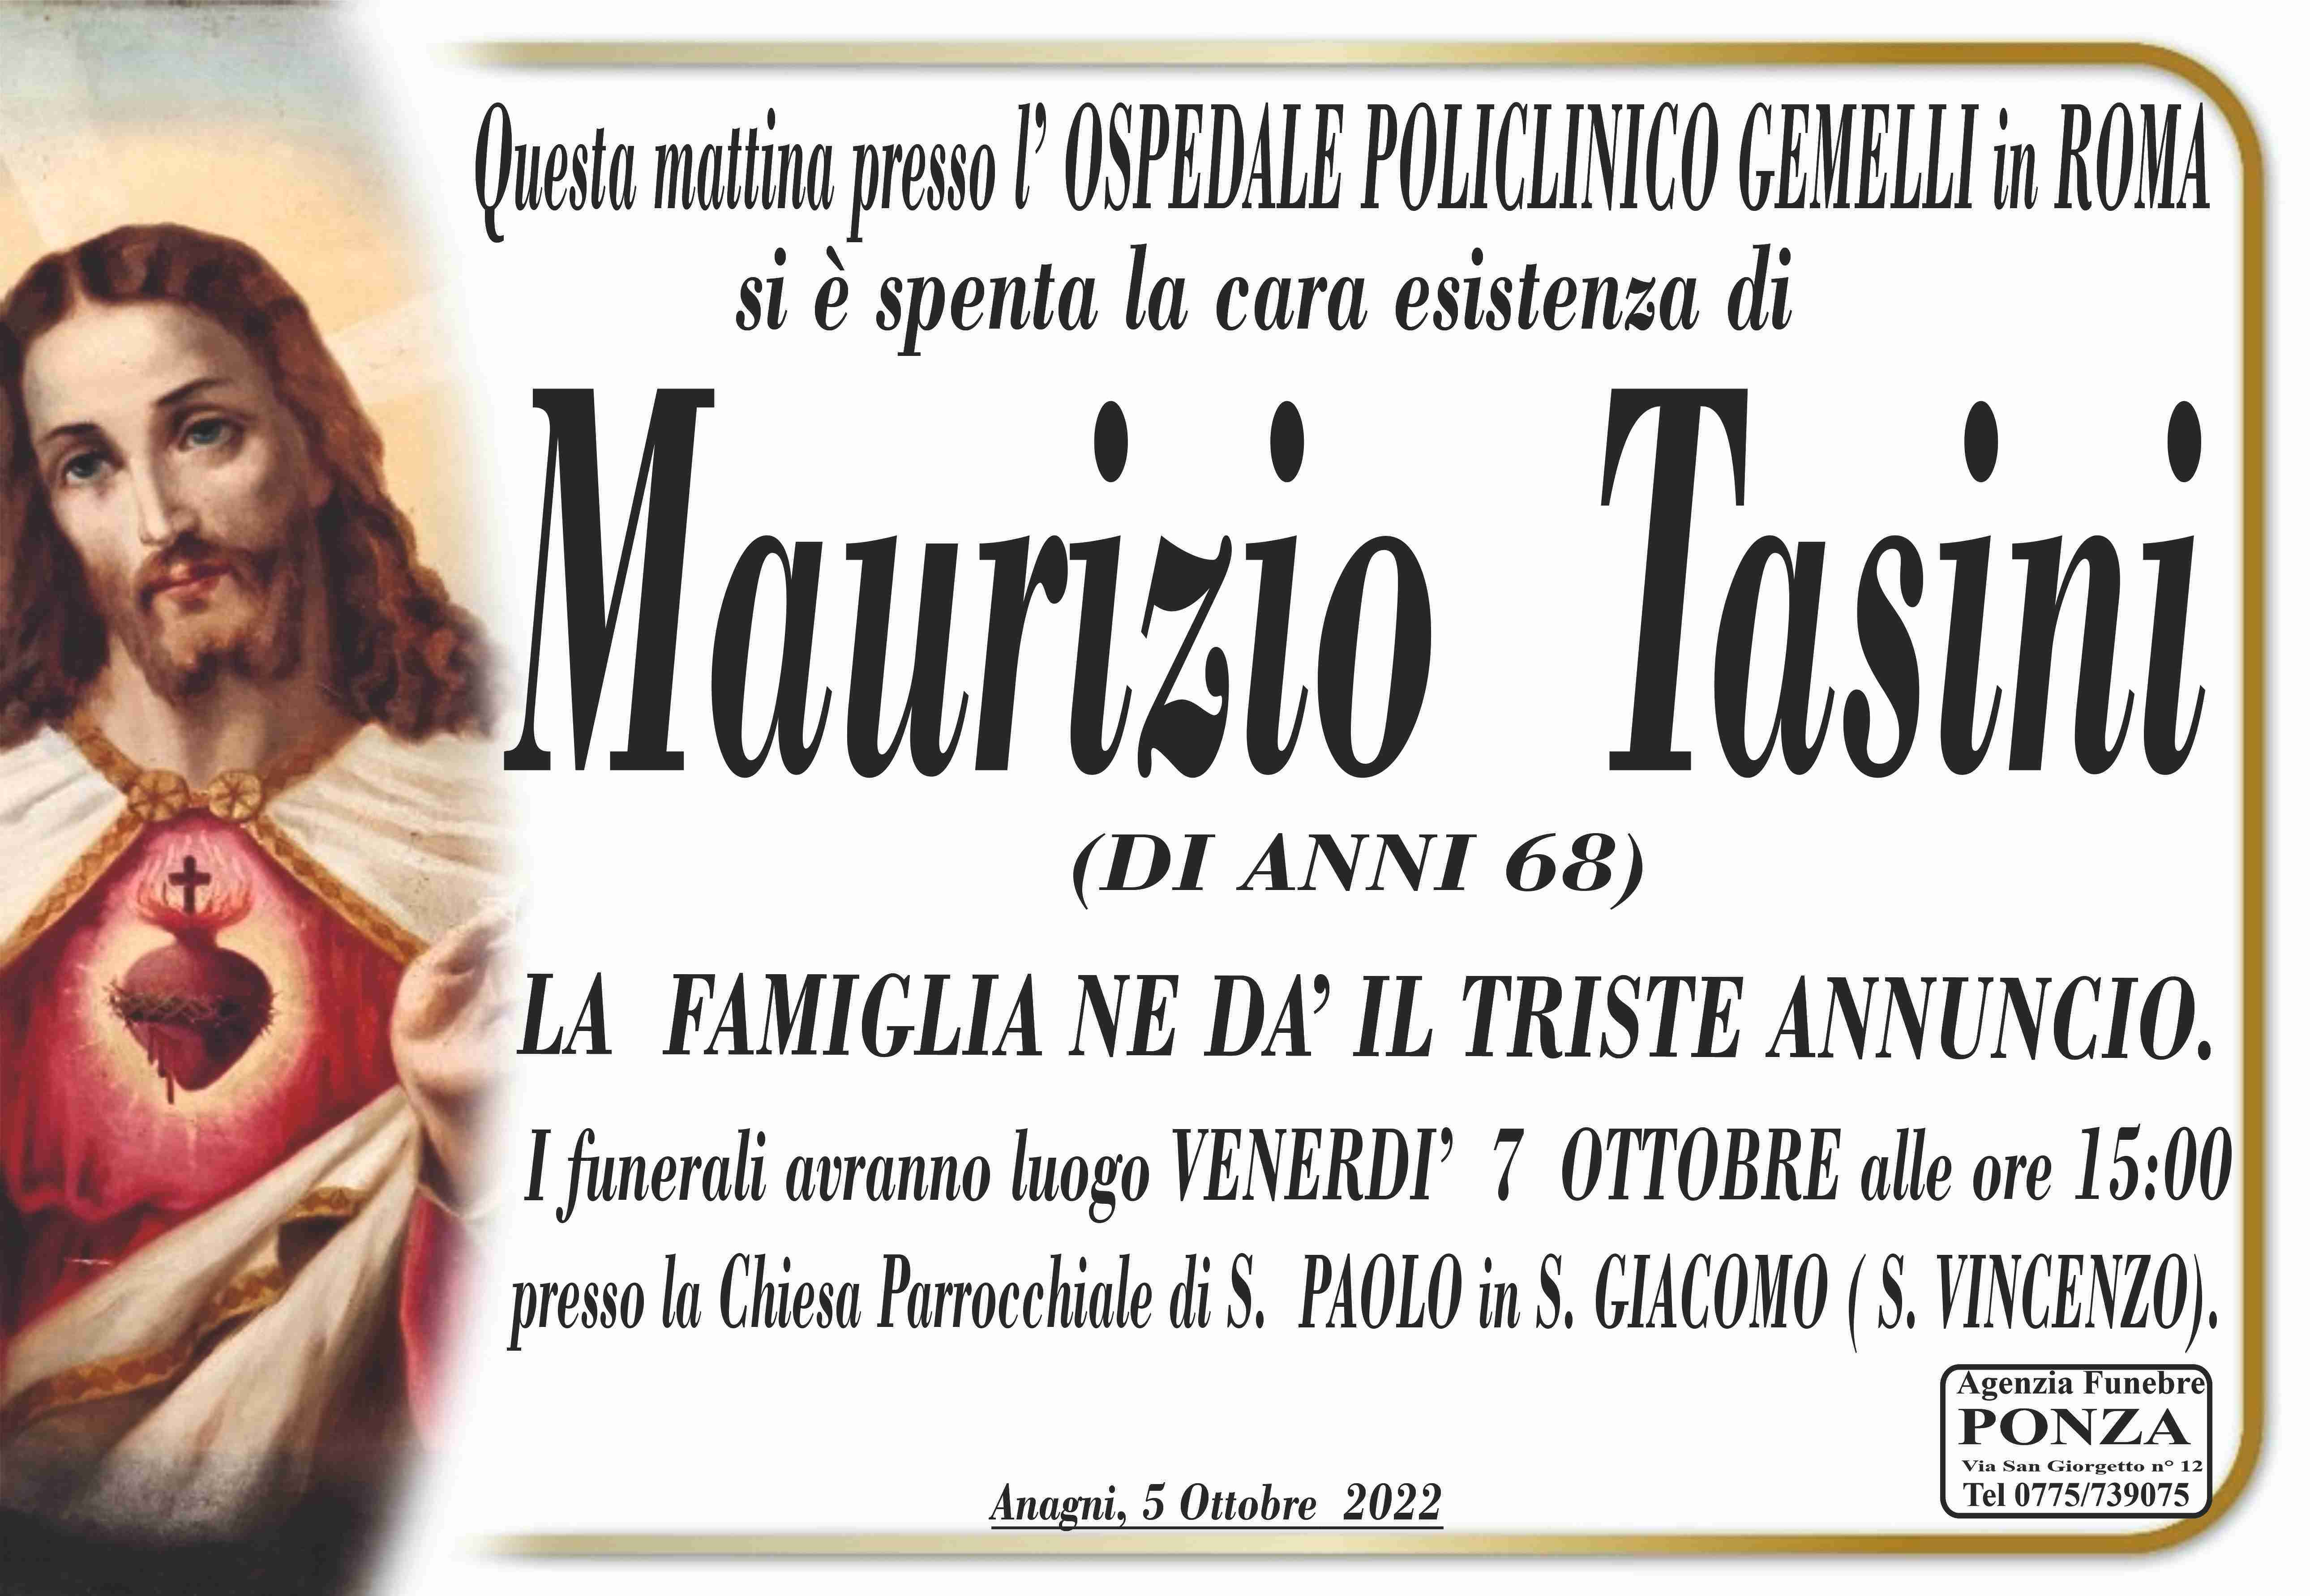 Maurizio Tasini